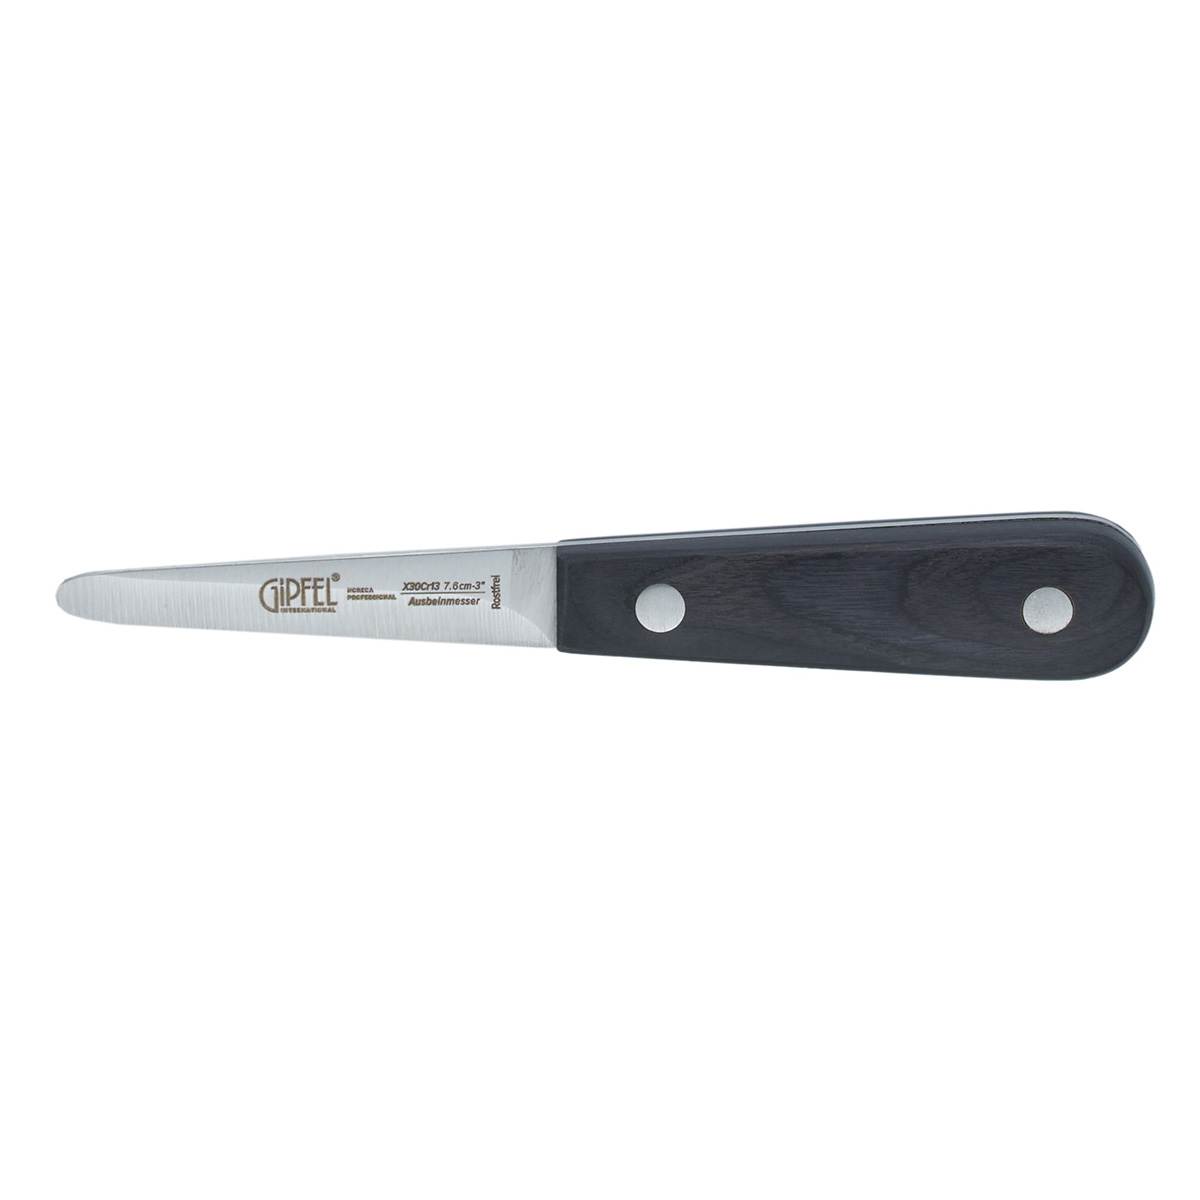 Нож для устриц Gipfel Horeca Pro 50587 16 см нож для чистки овощей gipfel horeca pro 50584 10 см